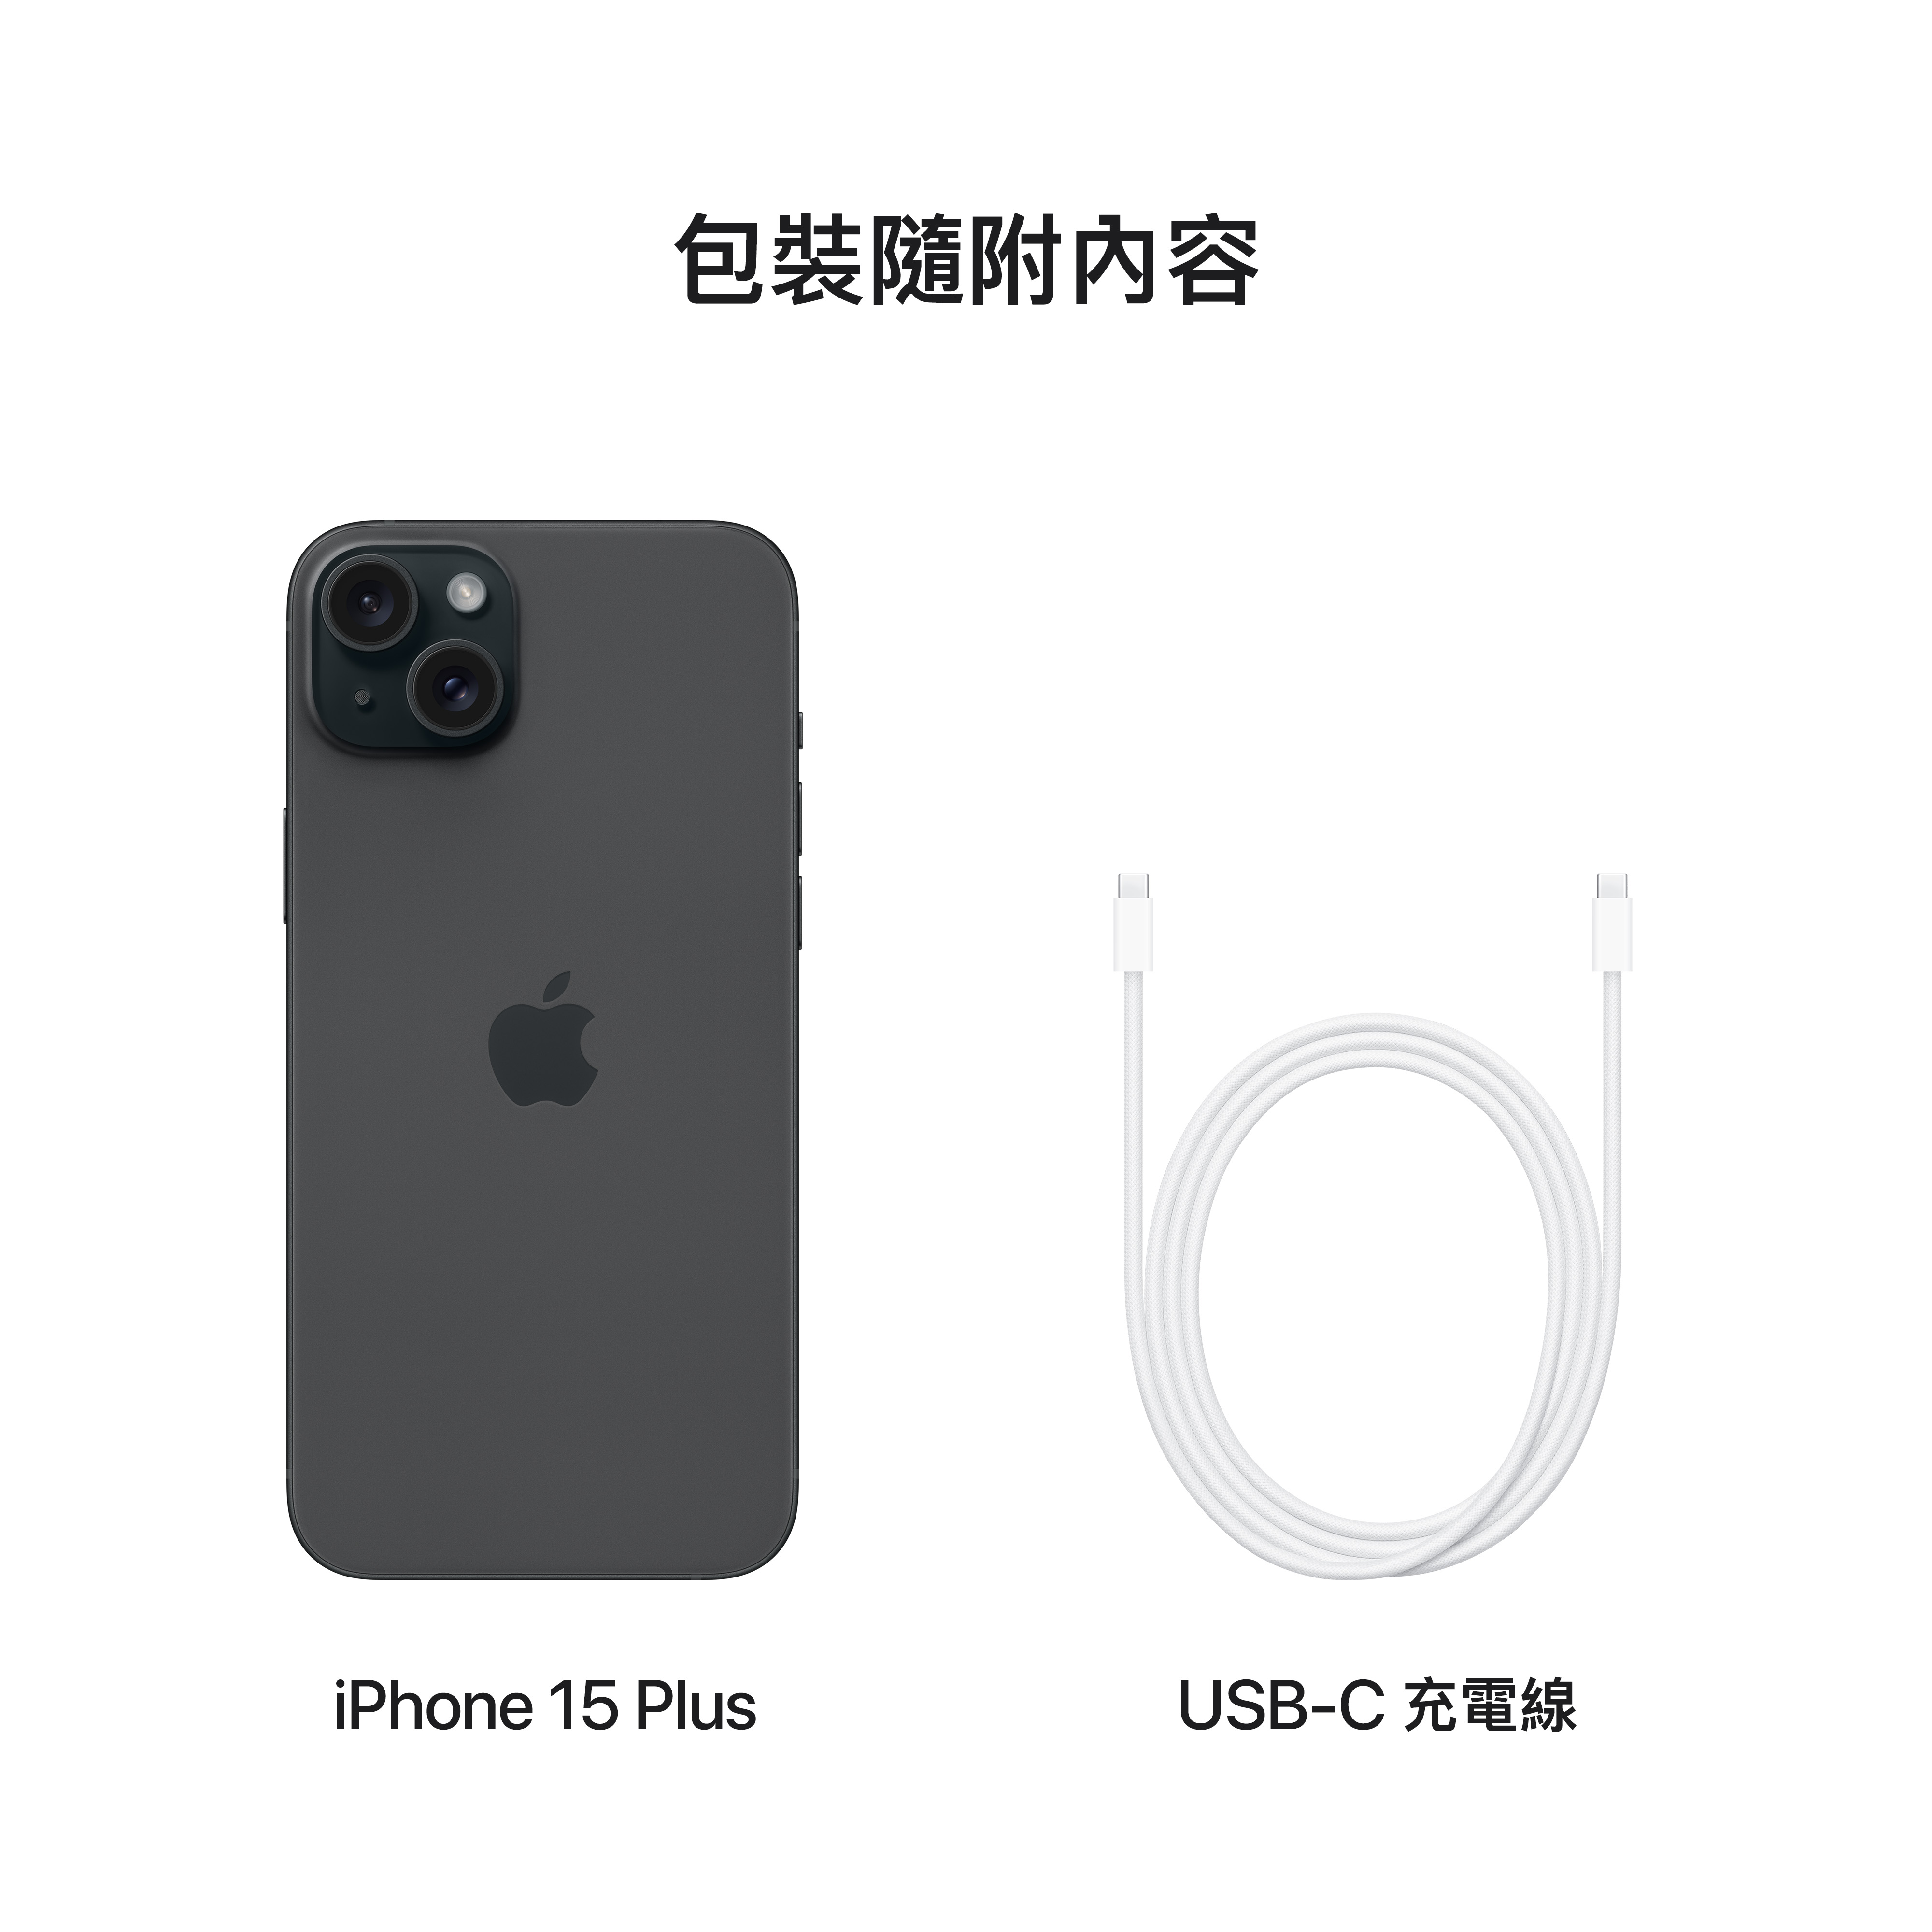 iPhone 15 Plus 128GB Black, Black, large image number 6